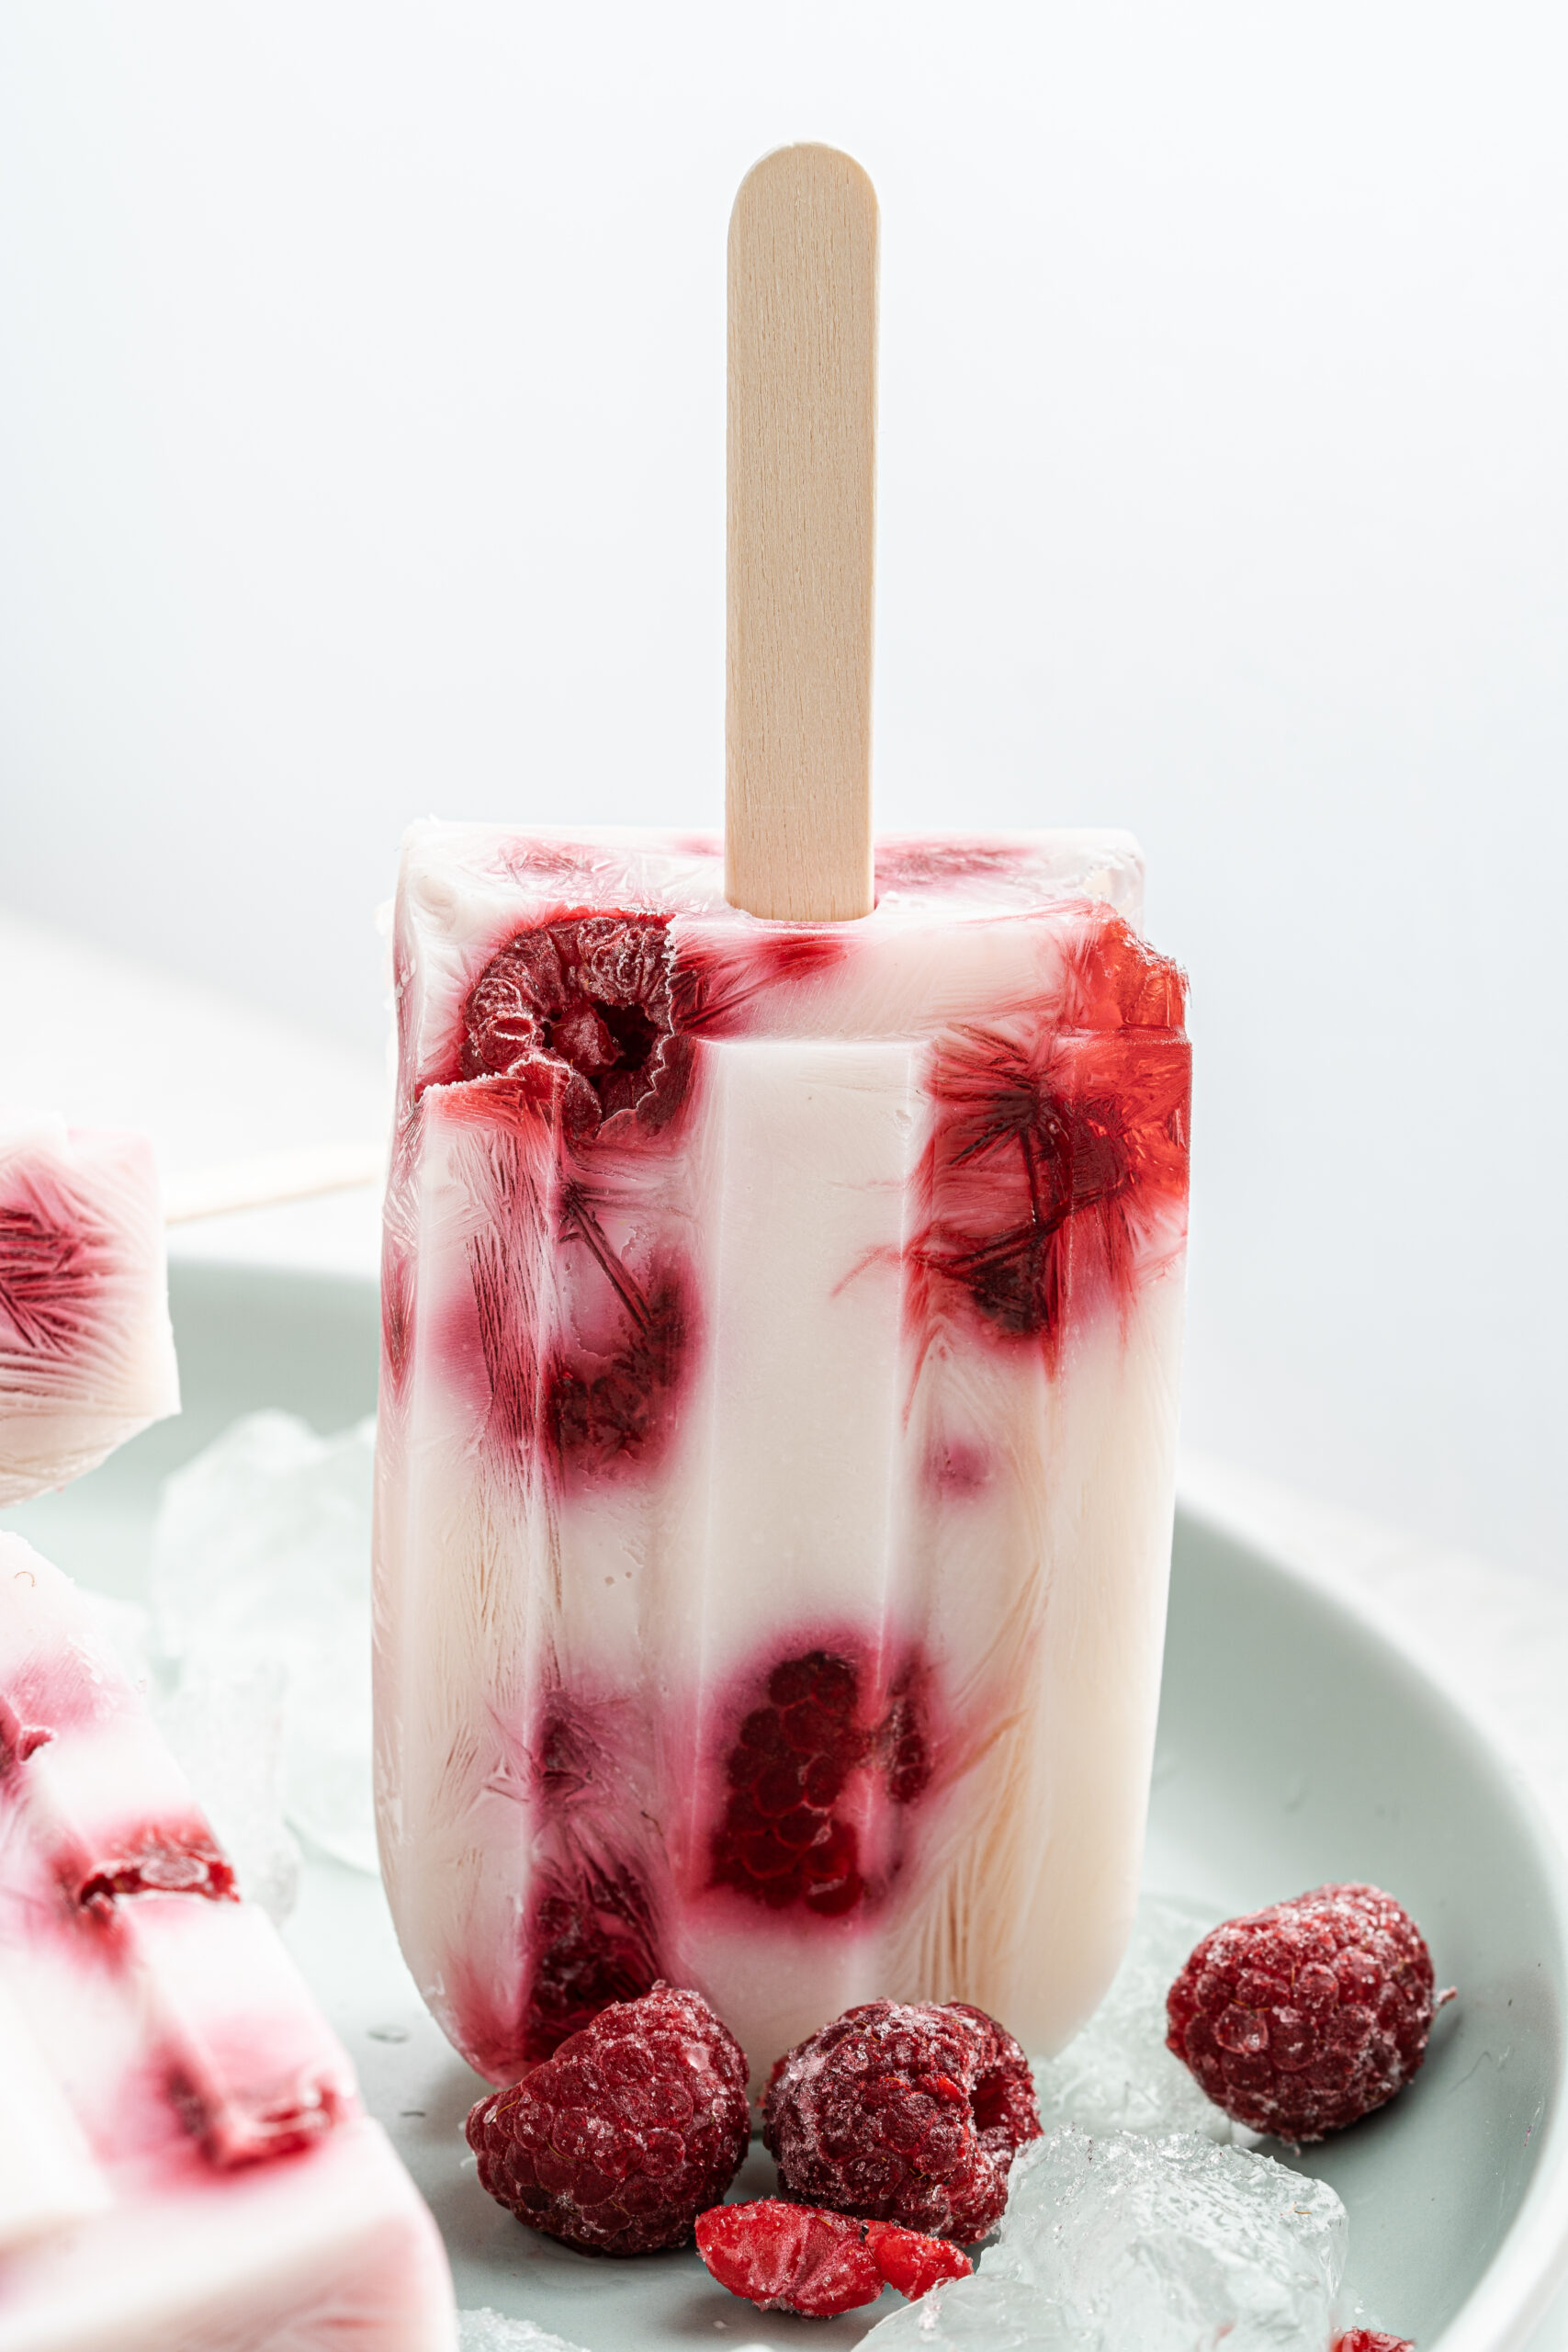 Upside down raspberry yogurt popsicle.